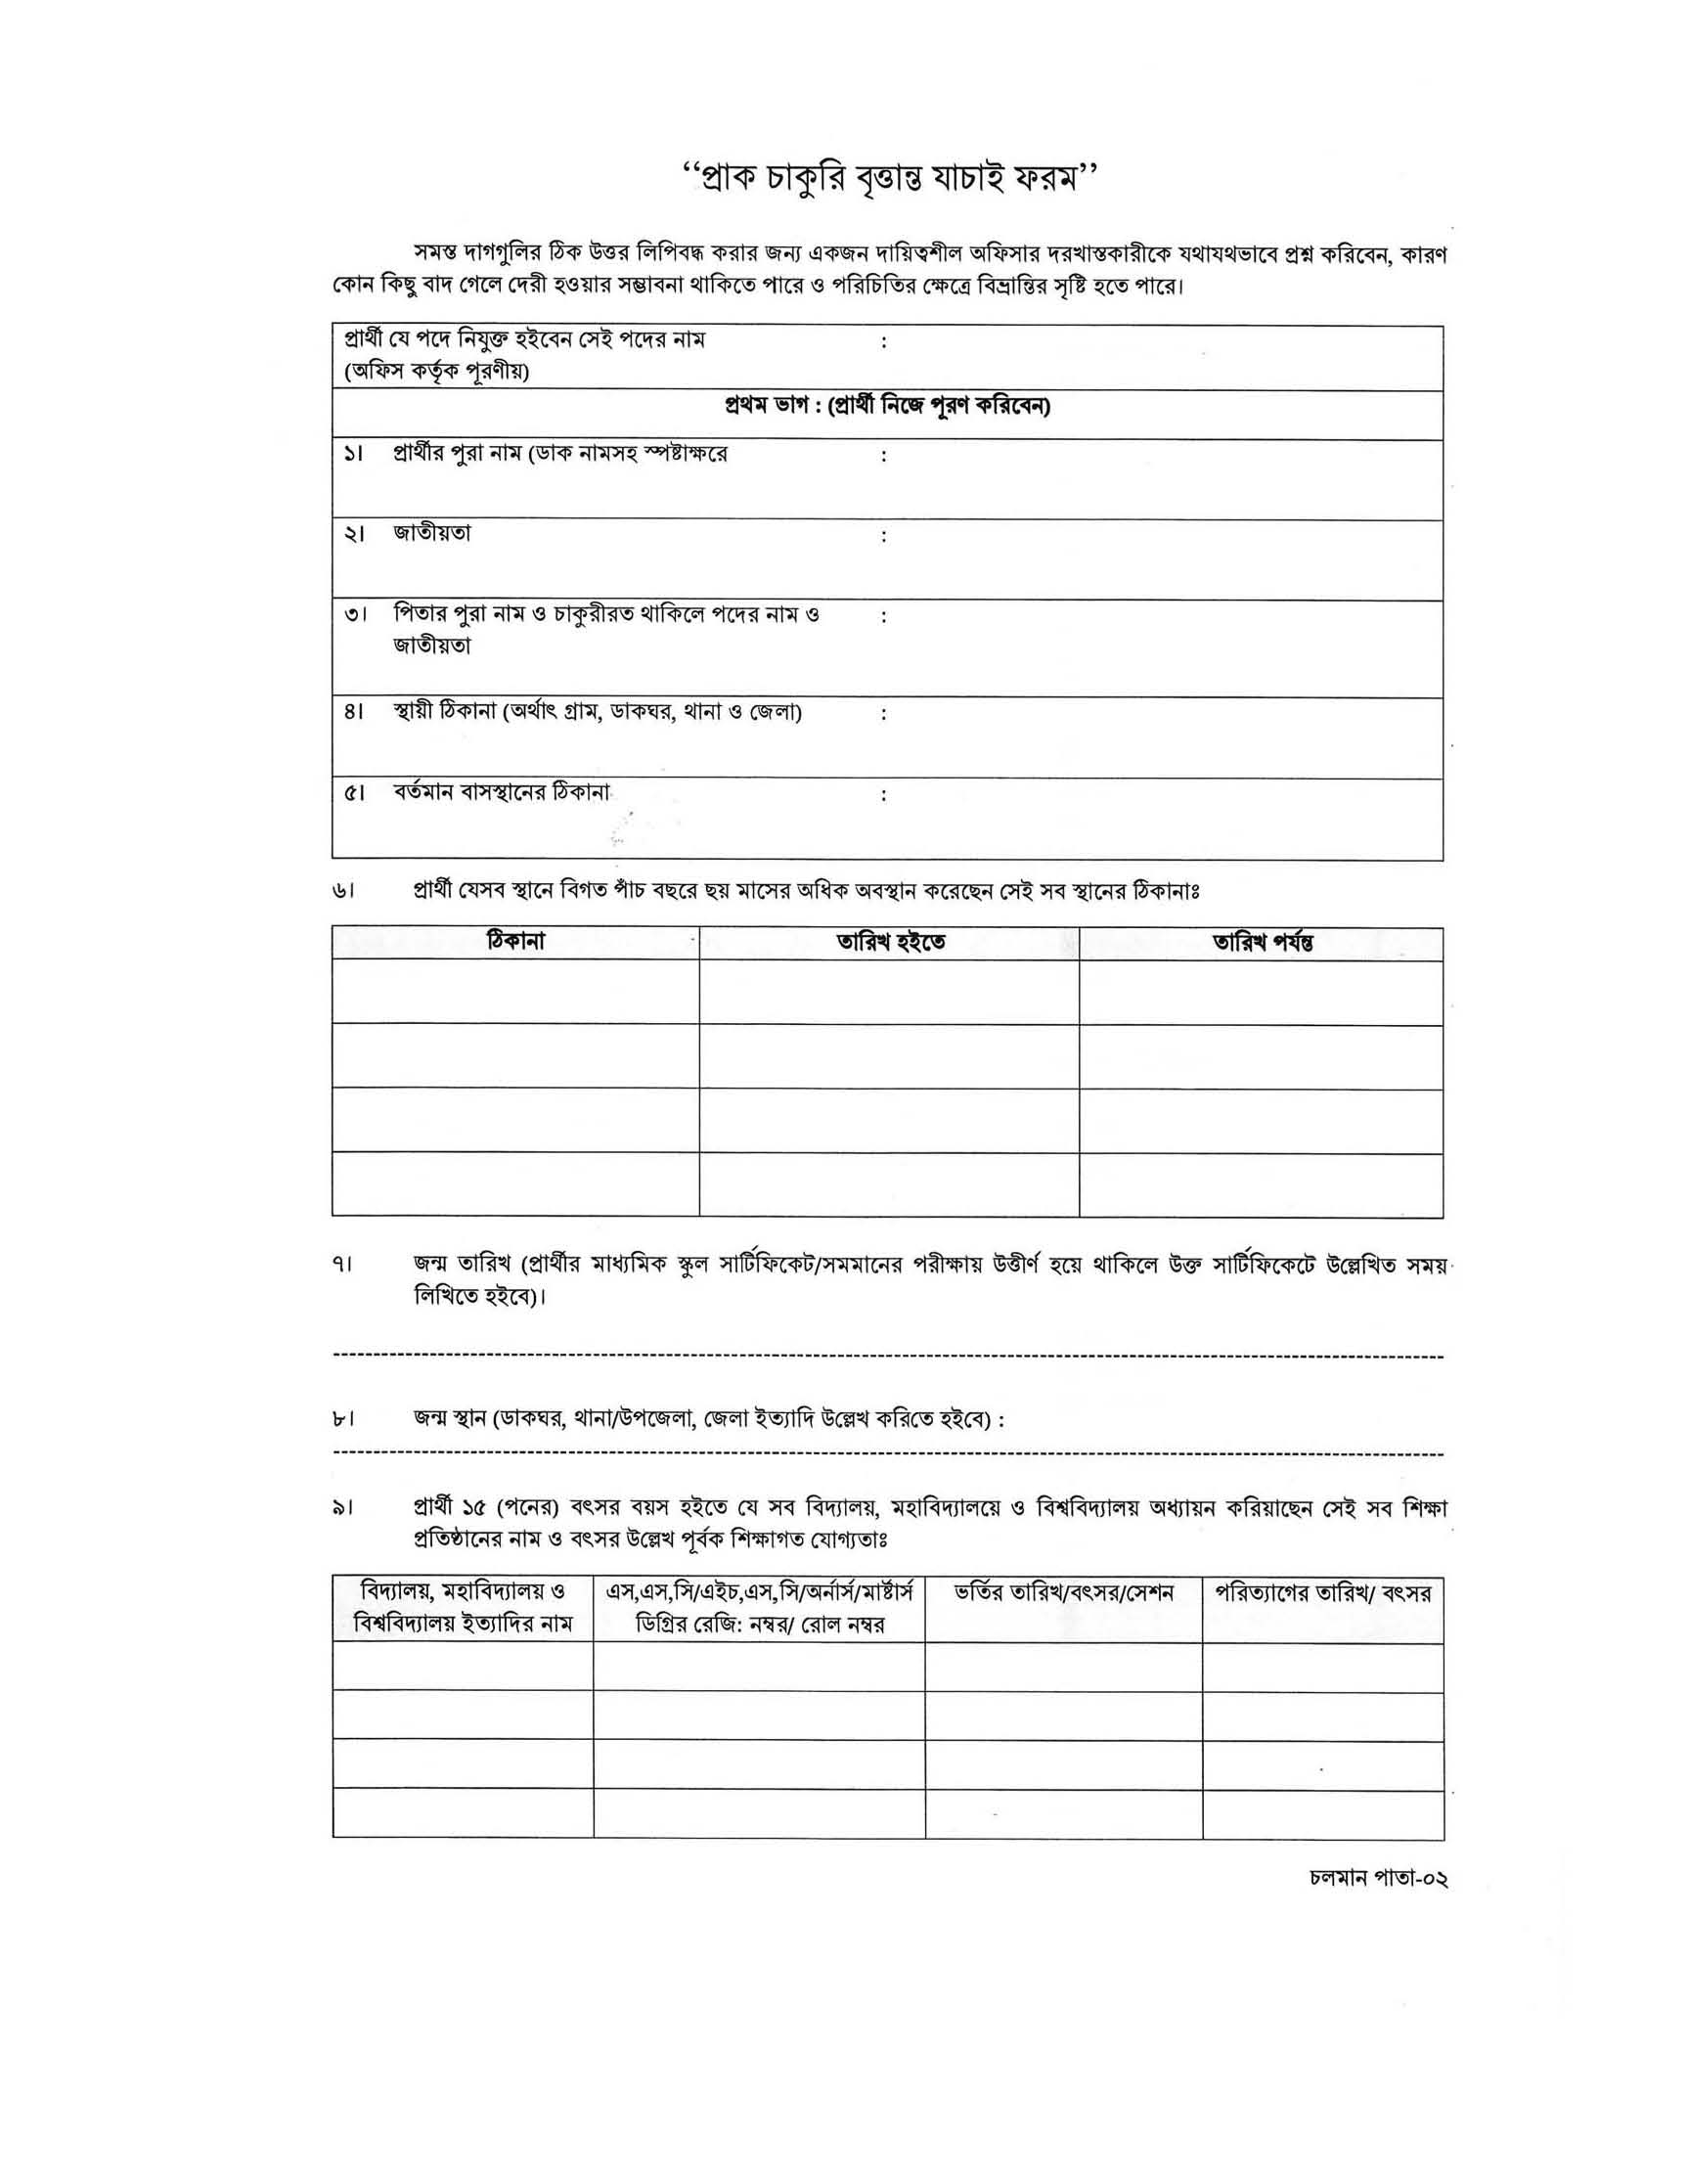 Police Verification Form (Bangla)_Page_1